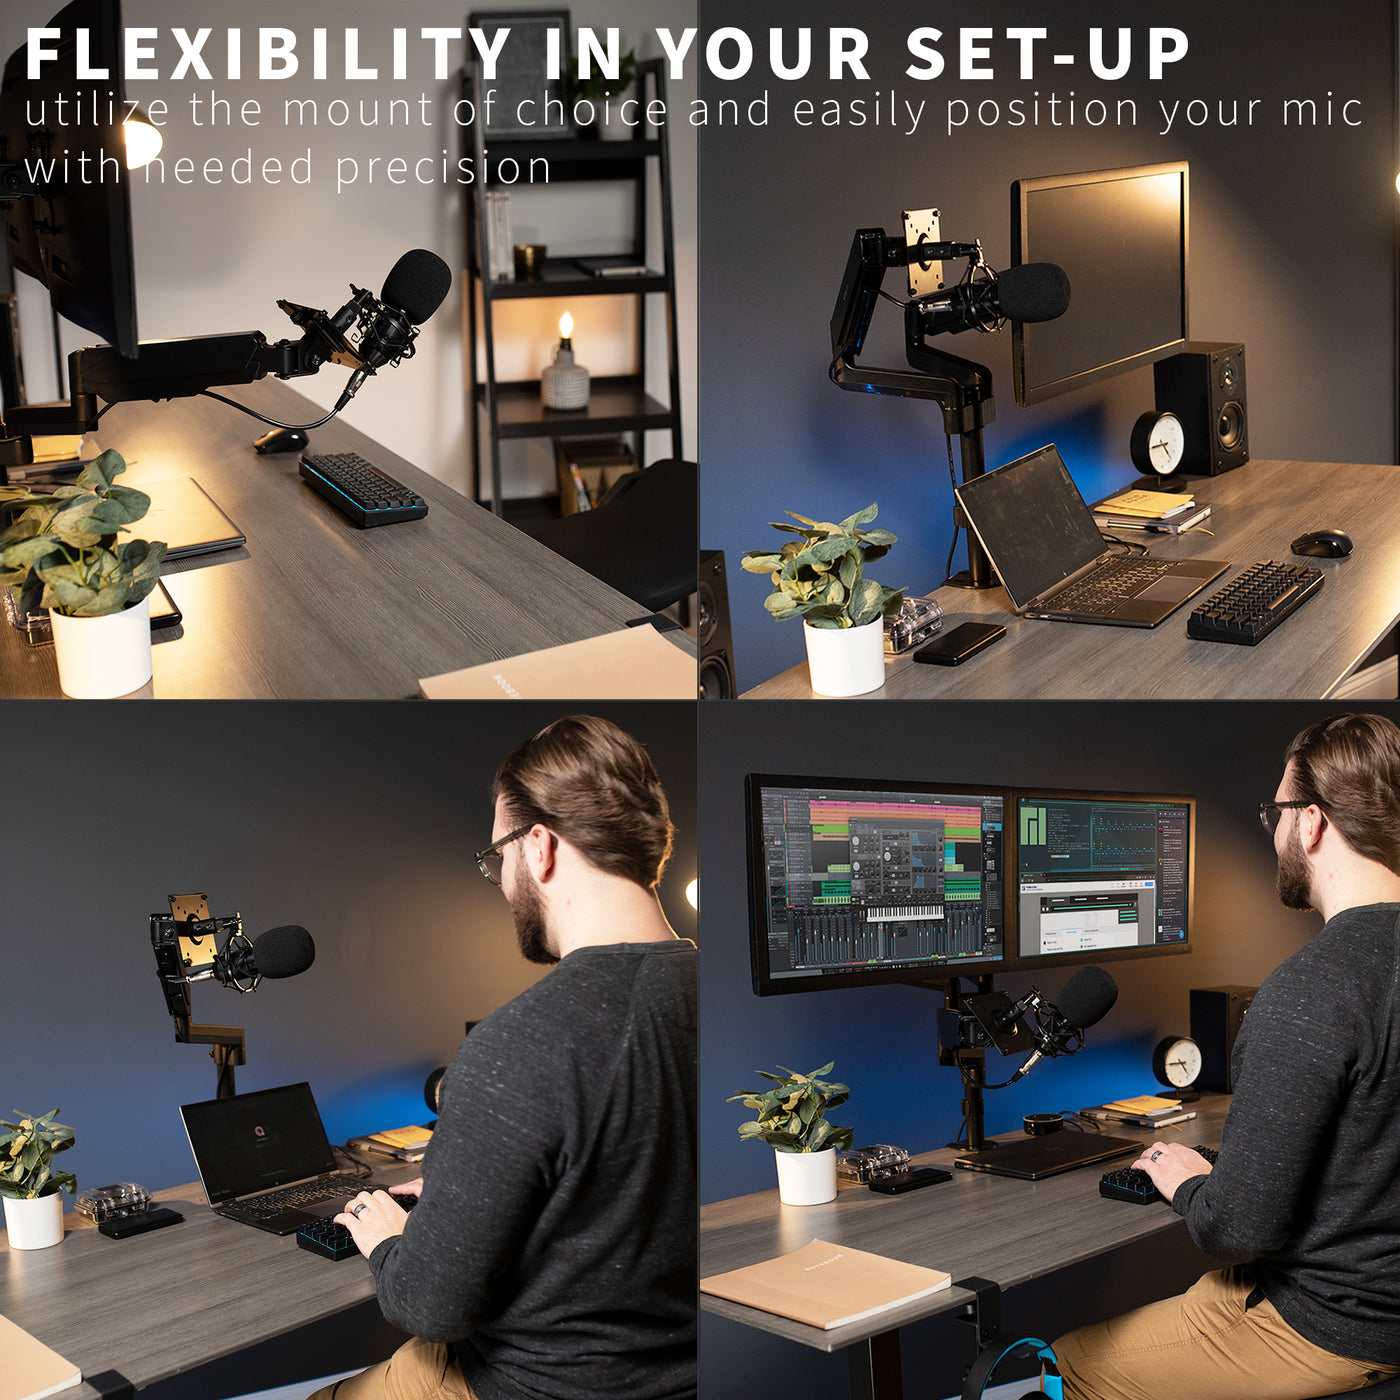 Flexible convenient desktop workstation microphone mount VESA adapter kit.